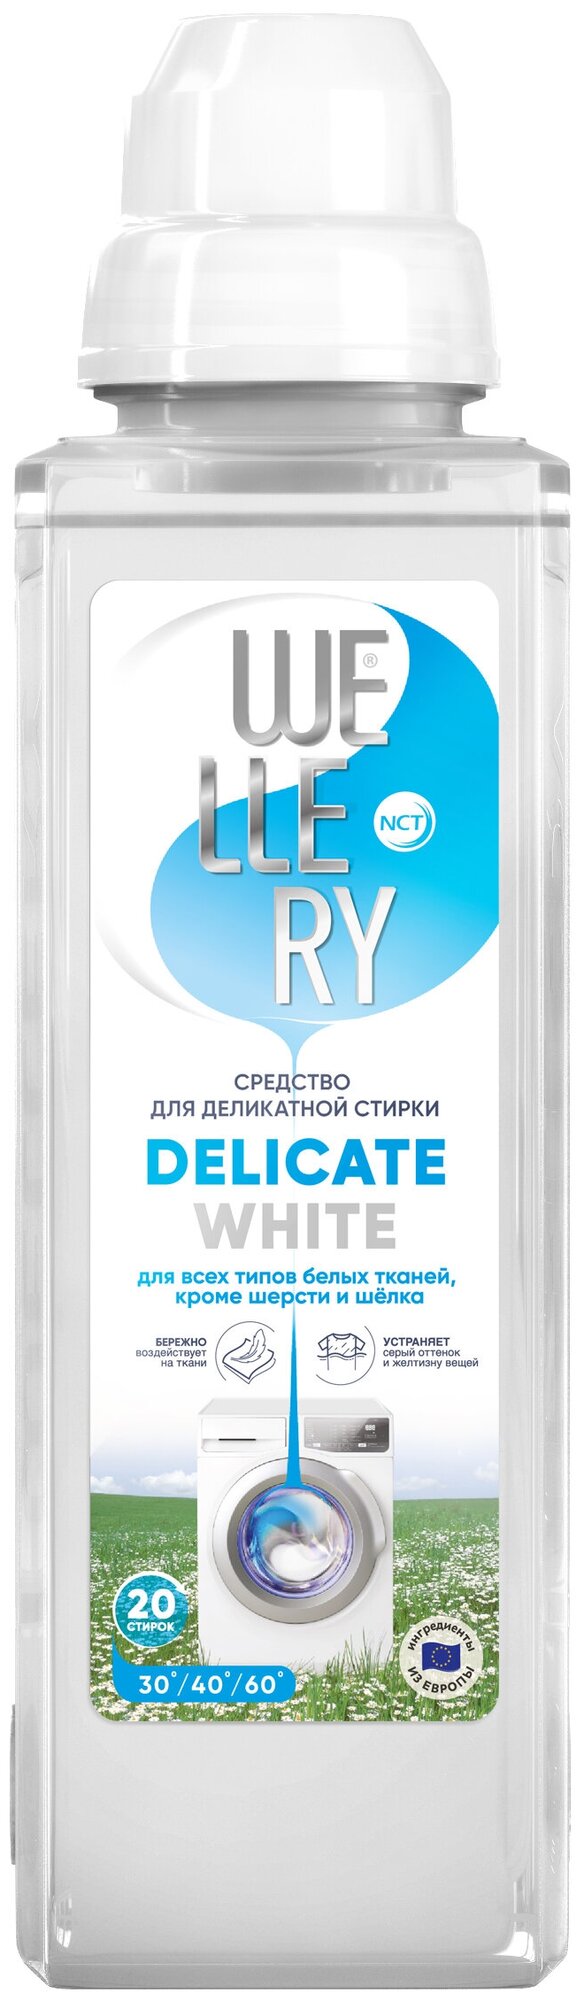 Wellery Delicate White Гель для стирки белых вещей 1л ПЭТ